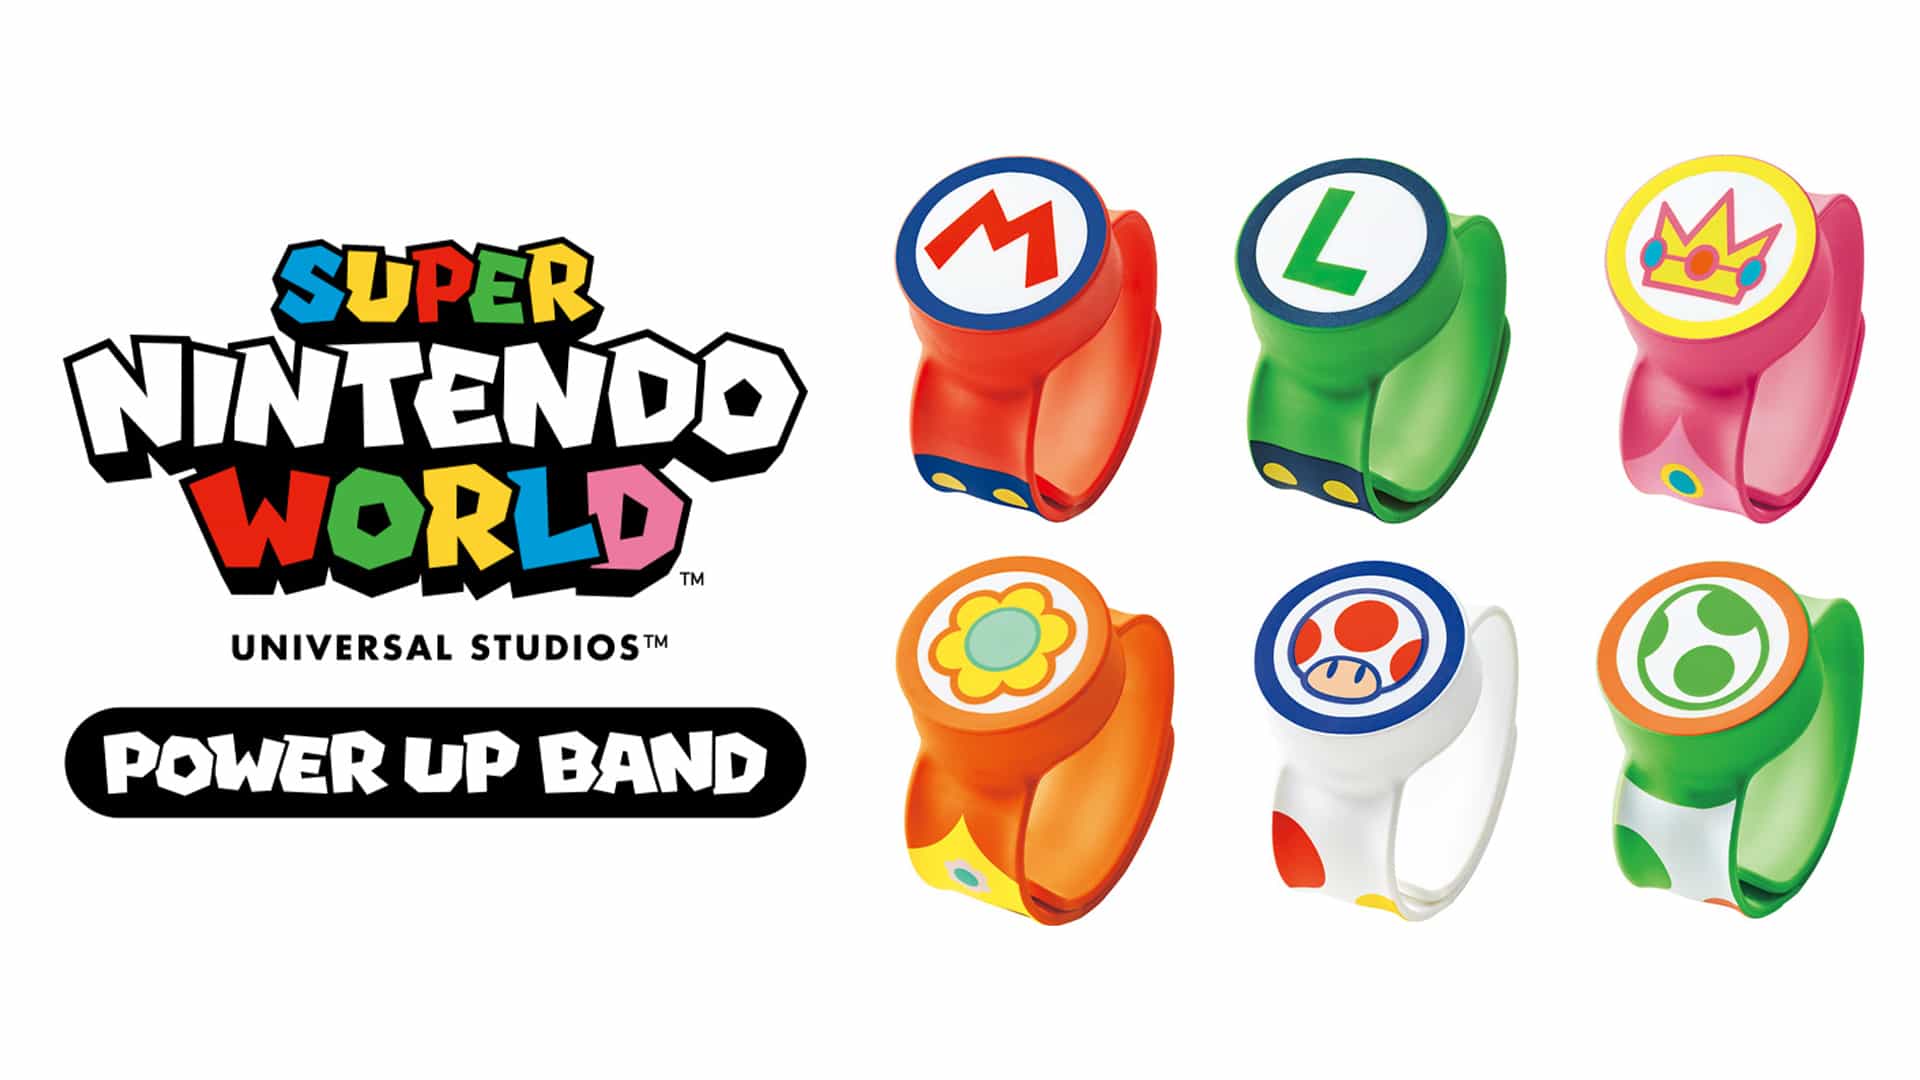 The amiibo use of the Super Nintendo World Power-Up band